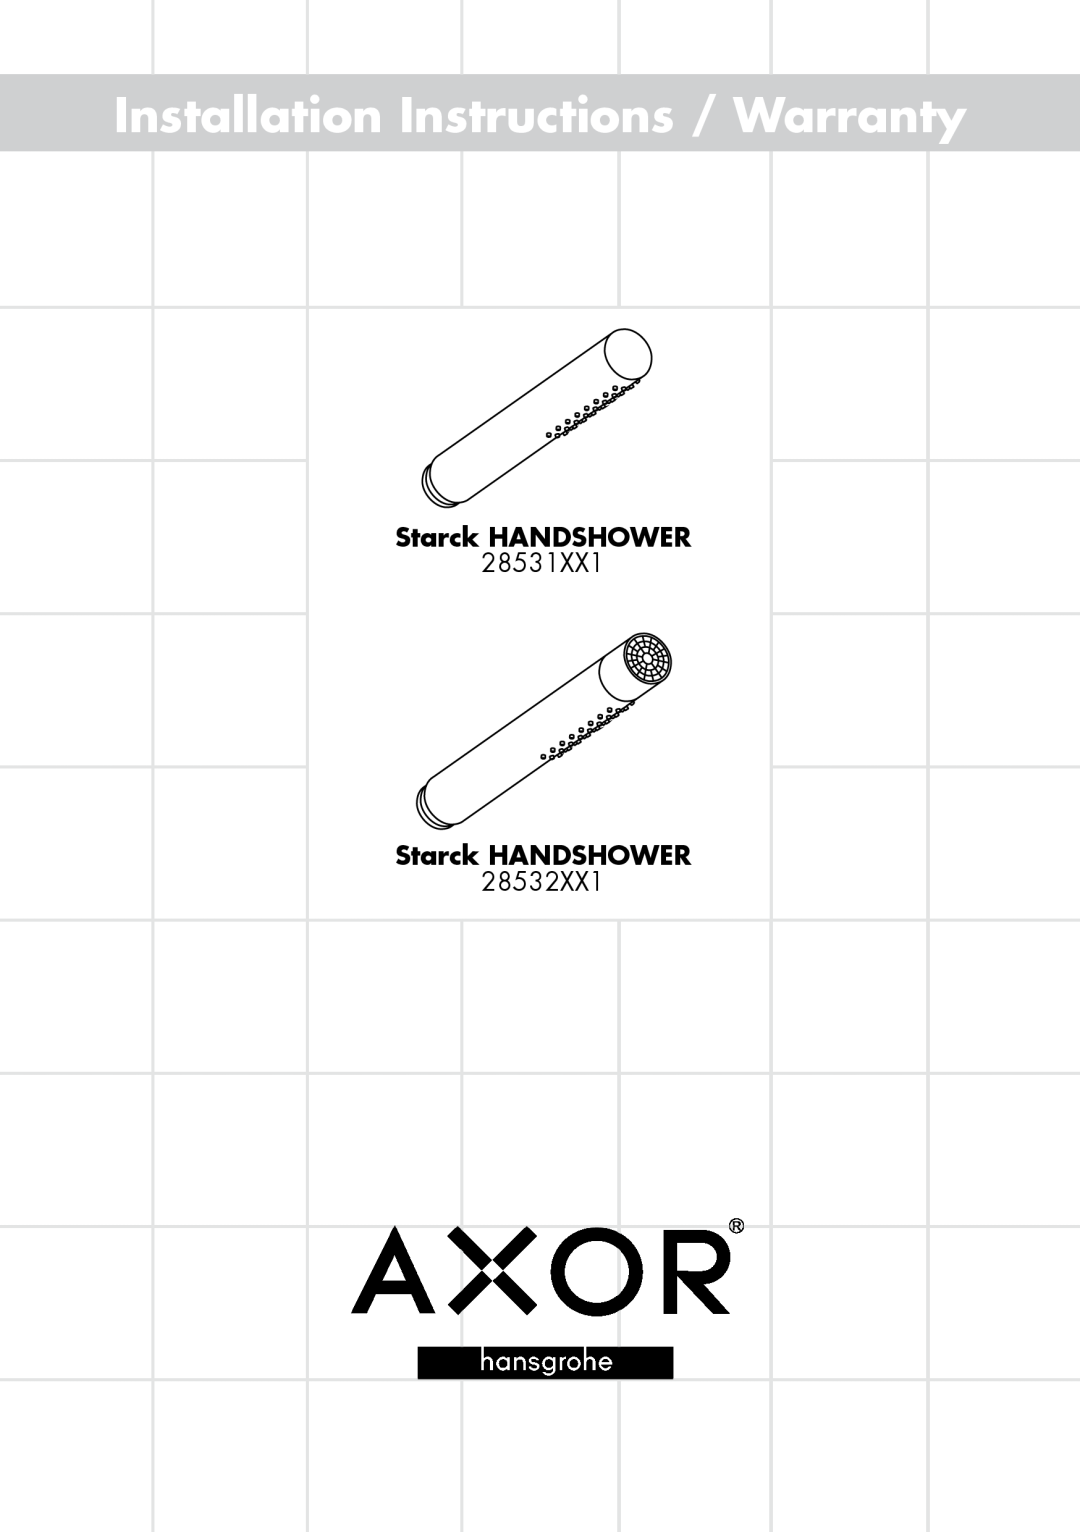 Axor 28532XX1 installation instructions Starck HANDSHOWER, 28531XX1, Installation Instructions / Warranty 